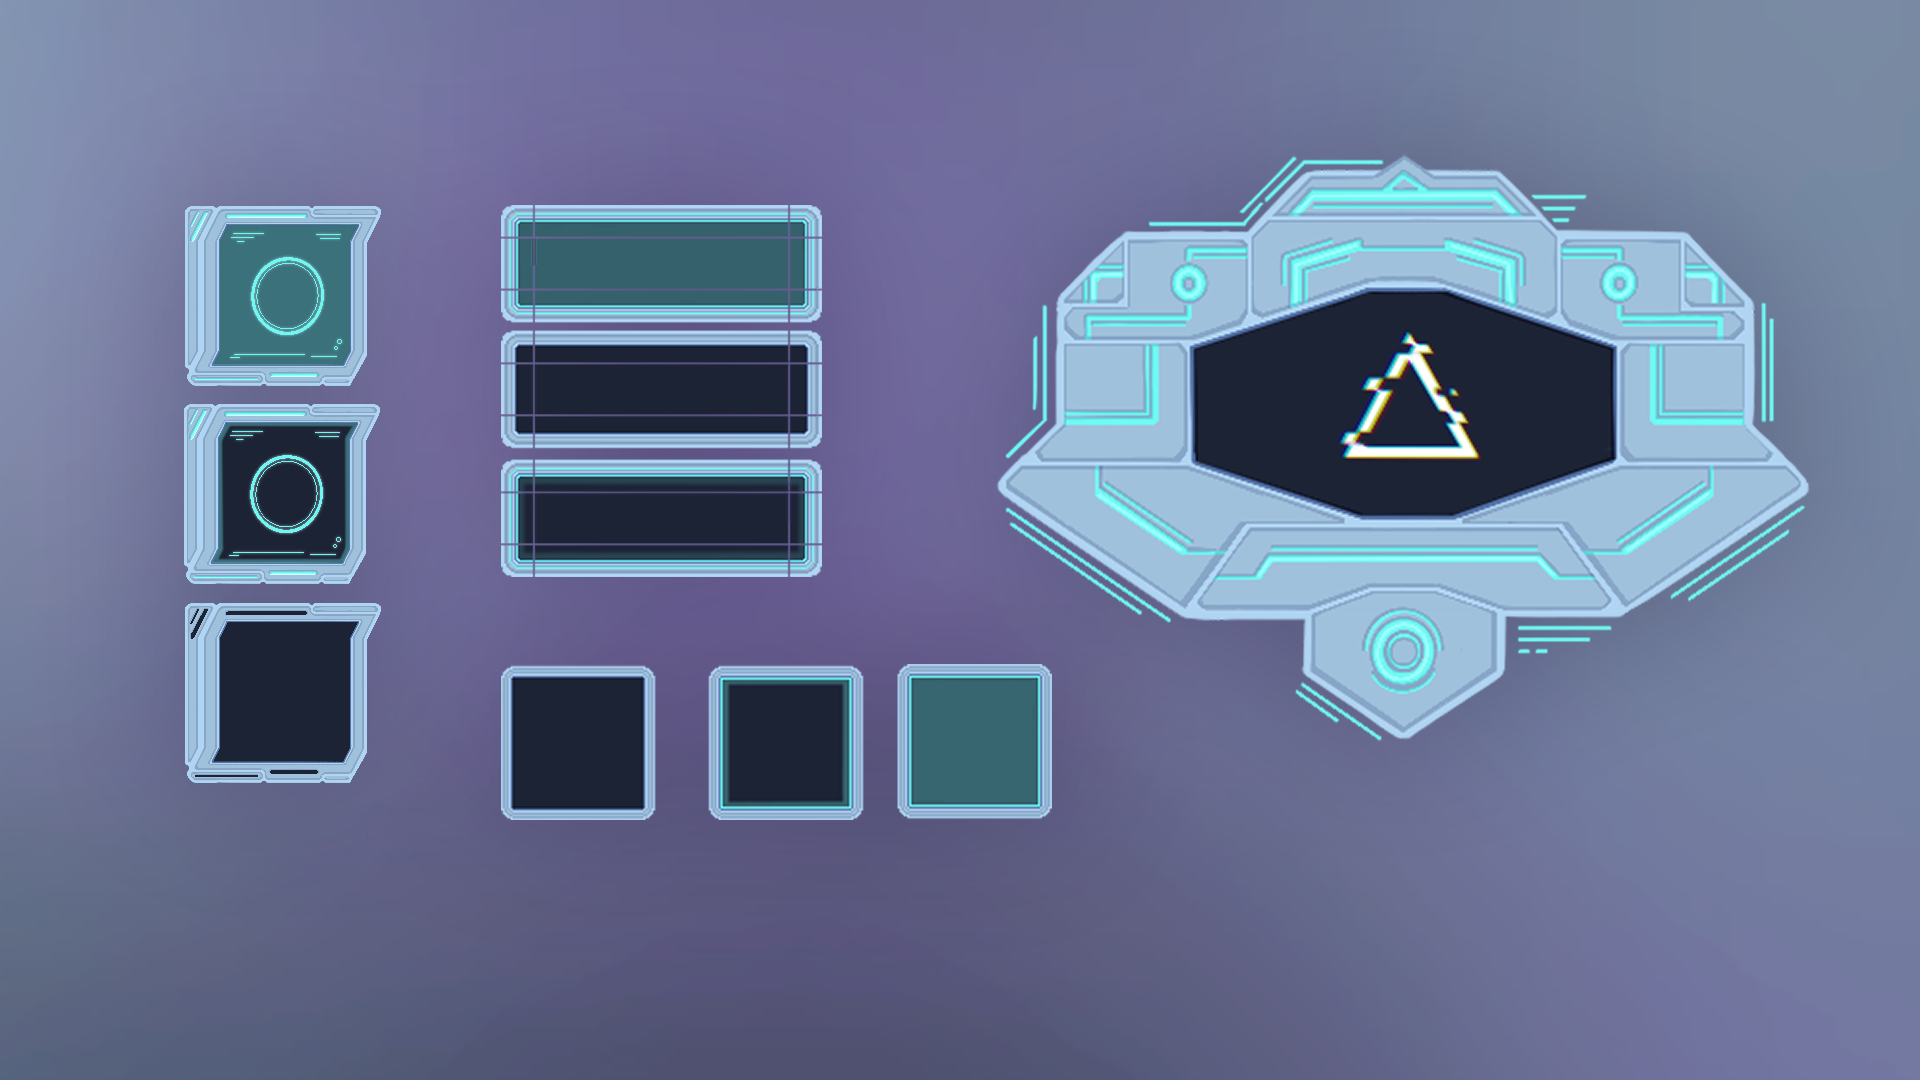 Cyberpunk Neon World GUI and Icons